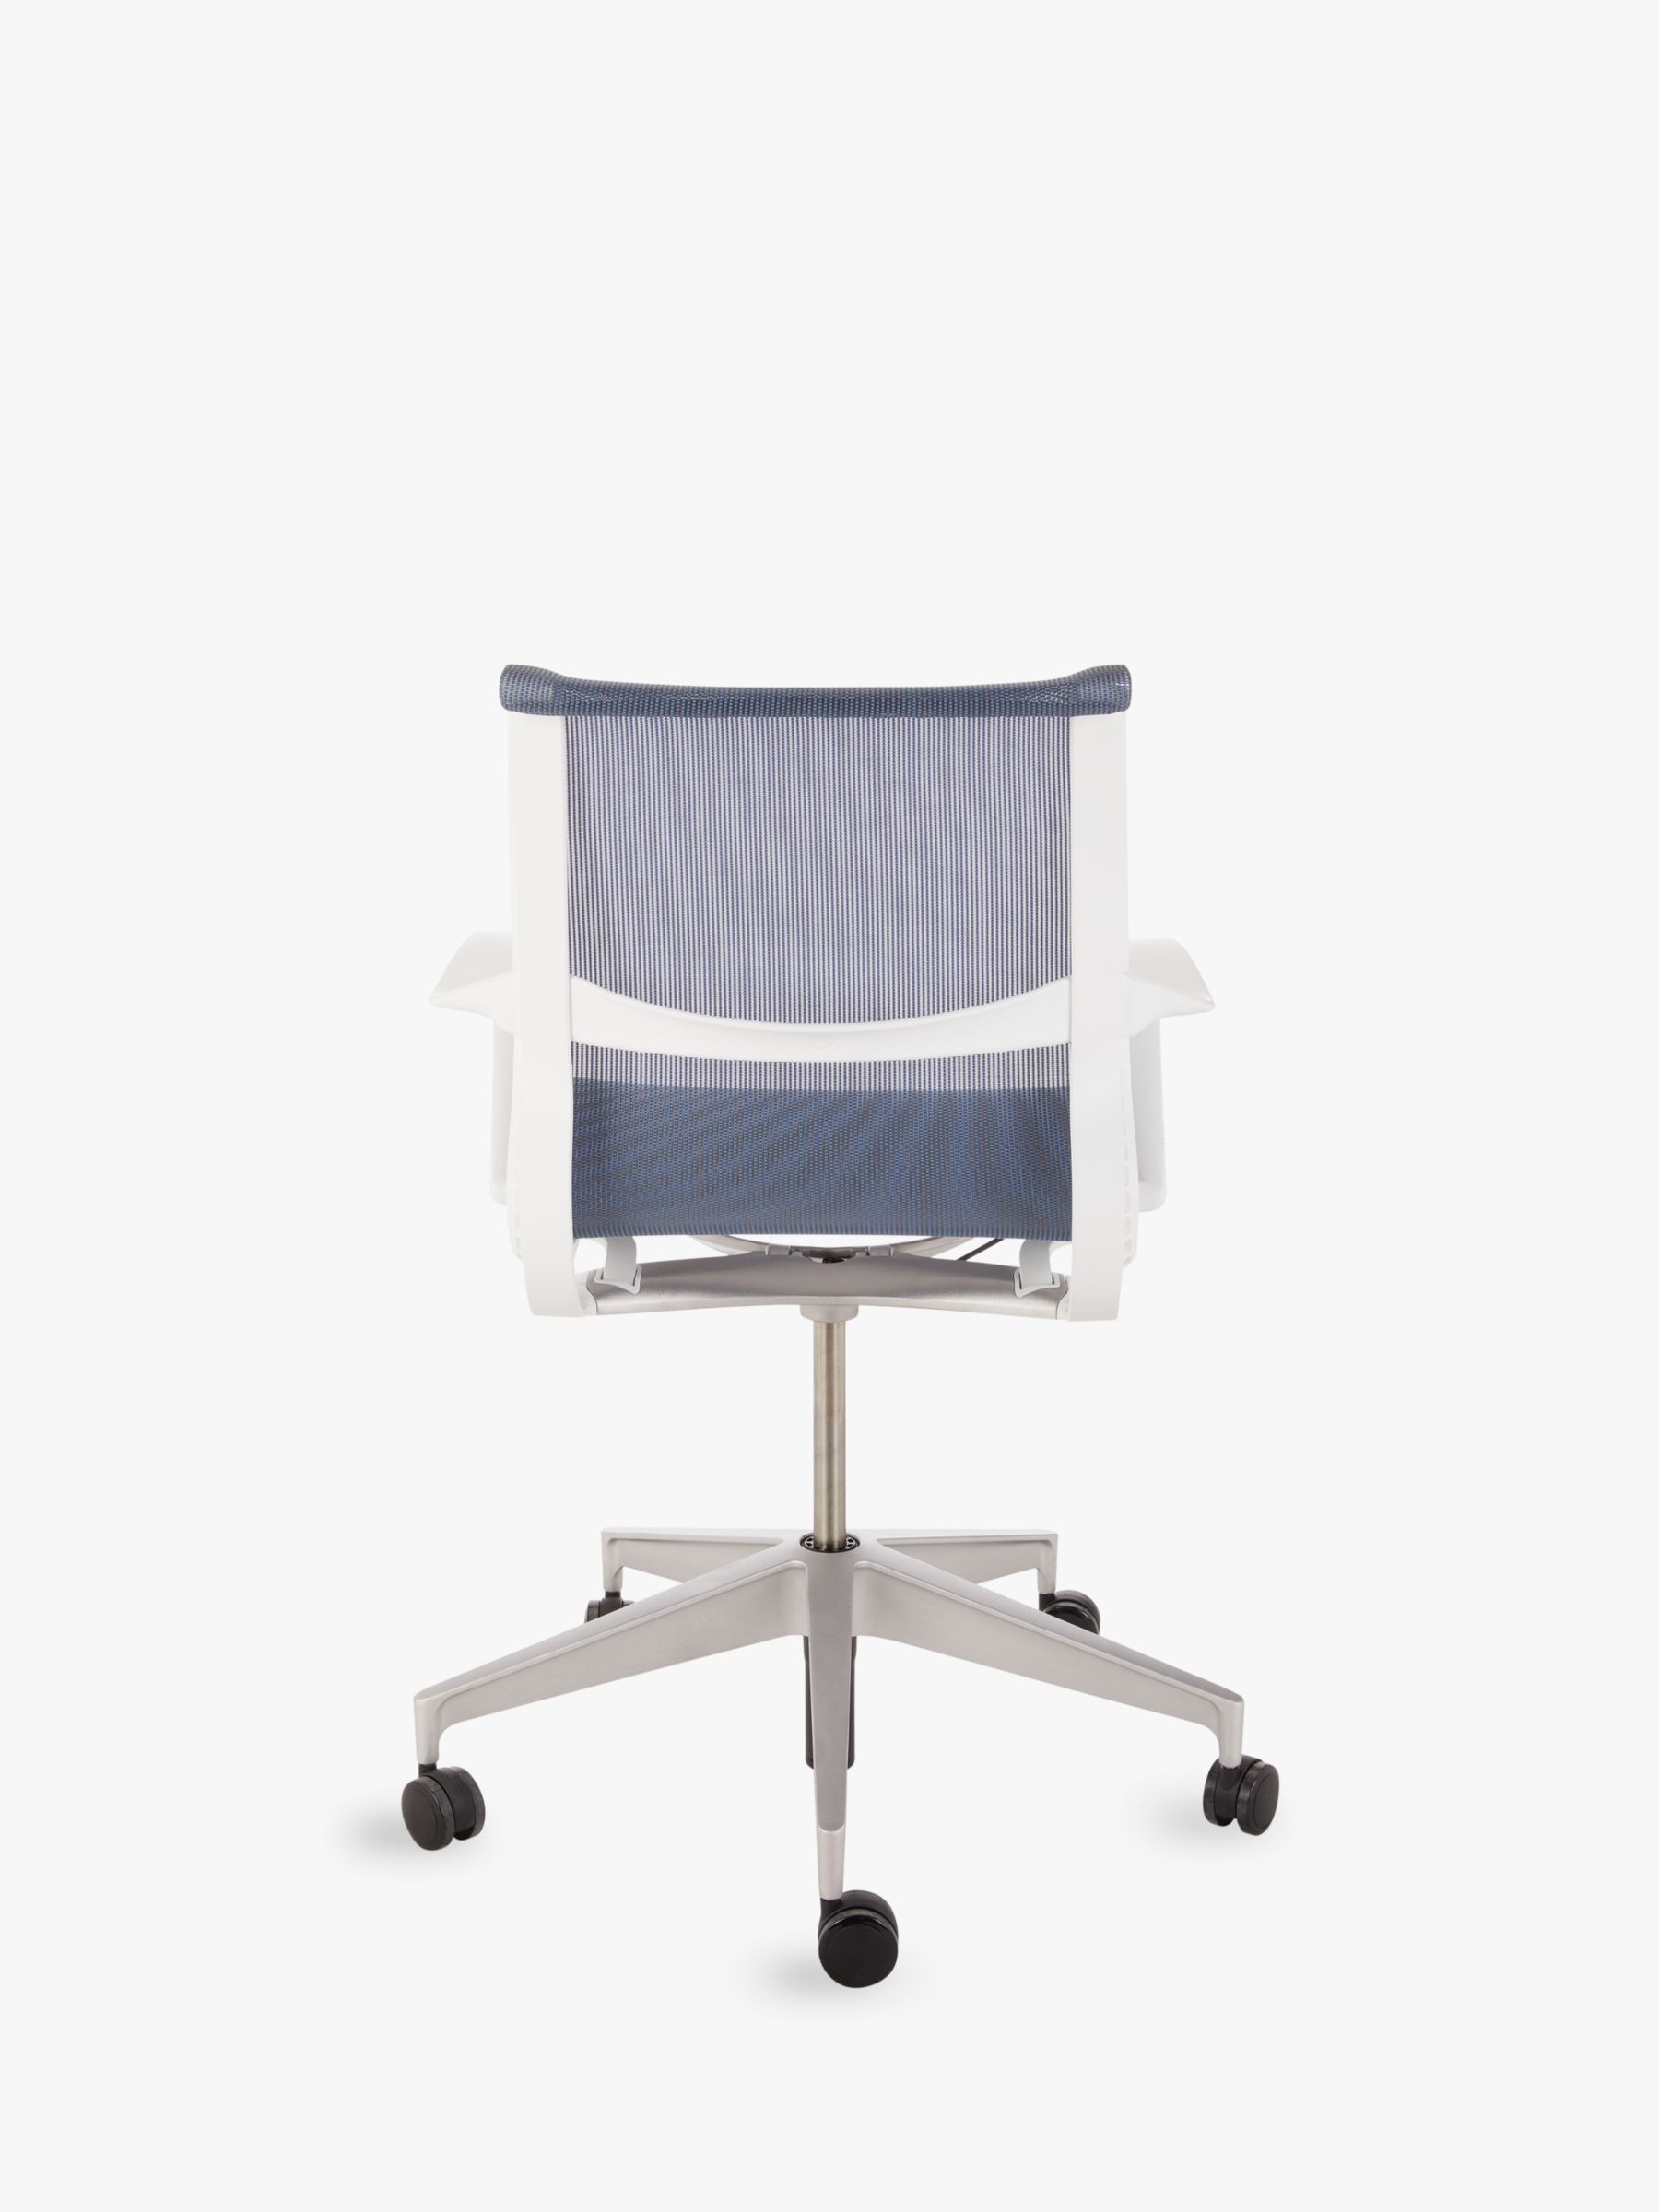 Herman Miller Setu Multi Purpose Chair, Blue